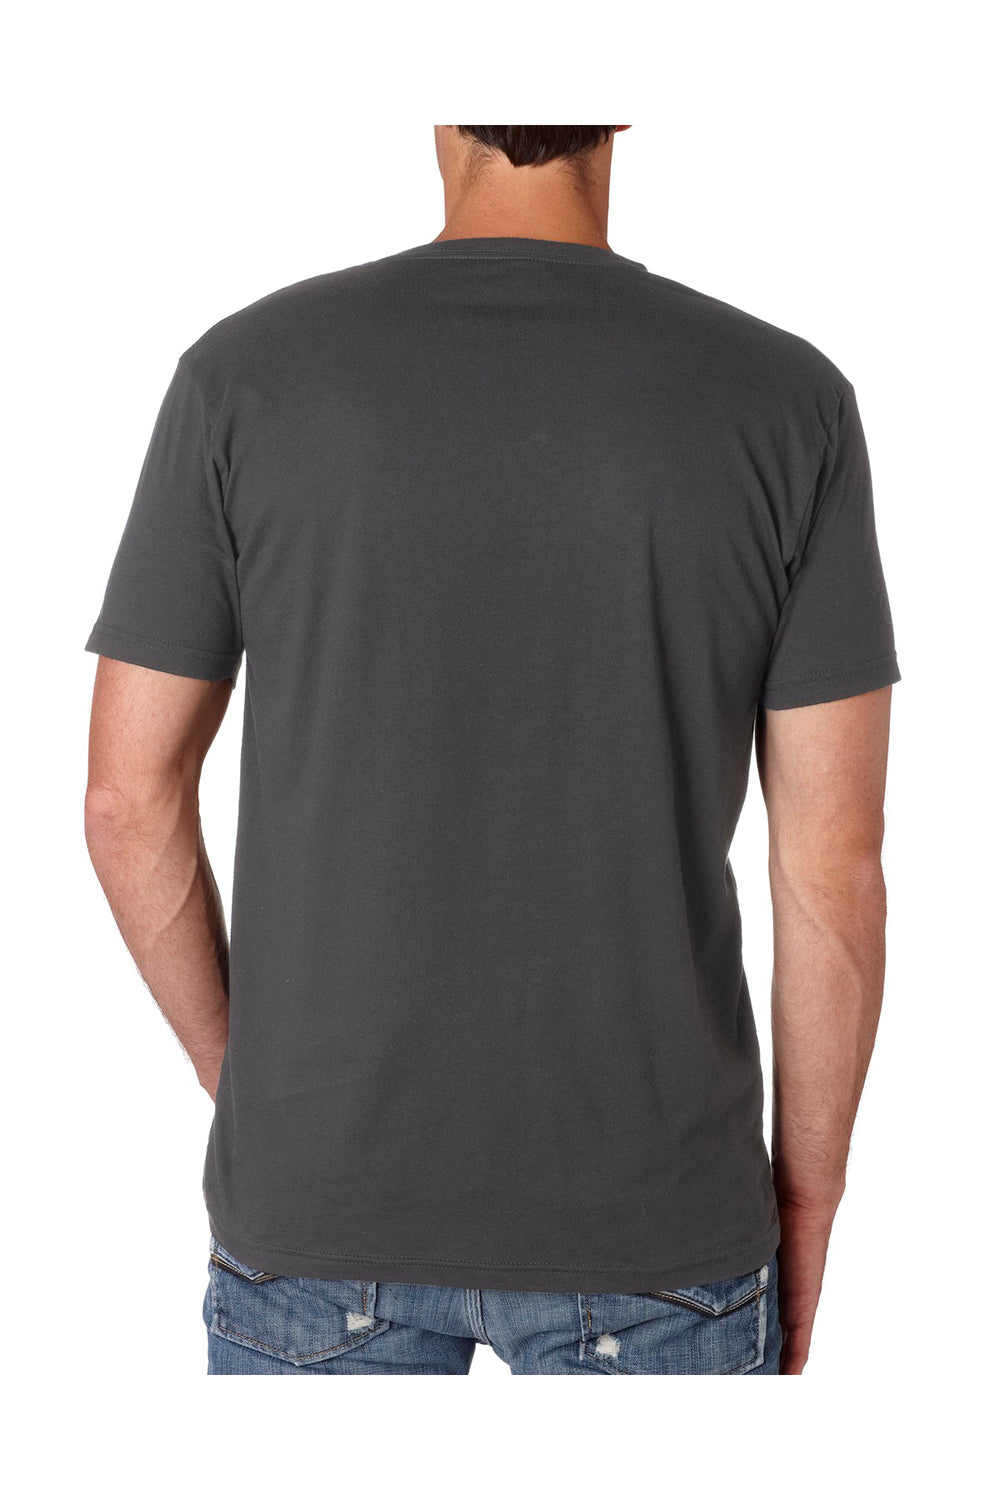 Next Level N3200 Mens Fine Jersey Short Sleeve V-Neck T-Shirt Heavy Metal Grey Back